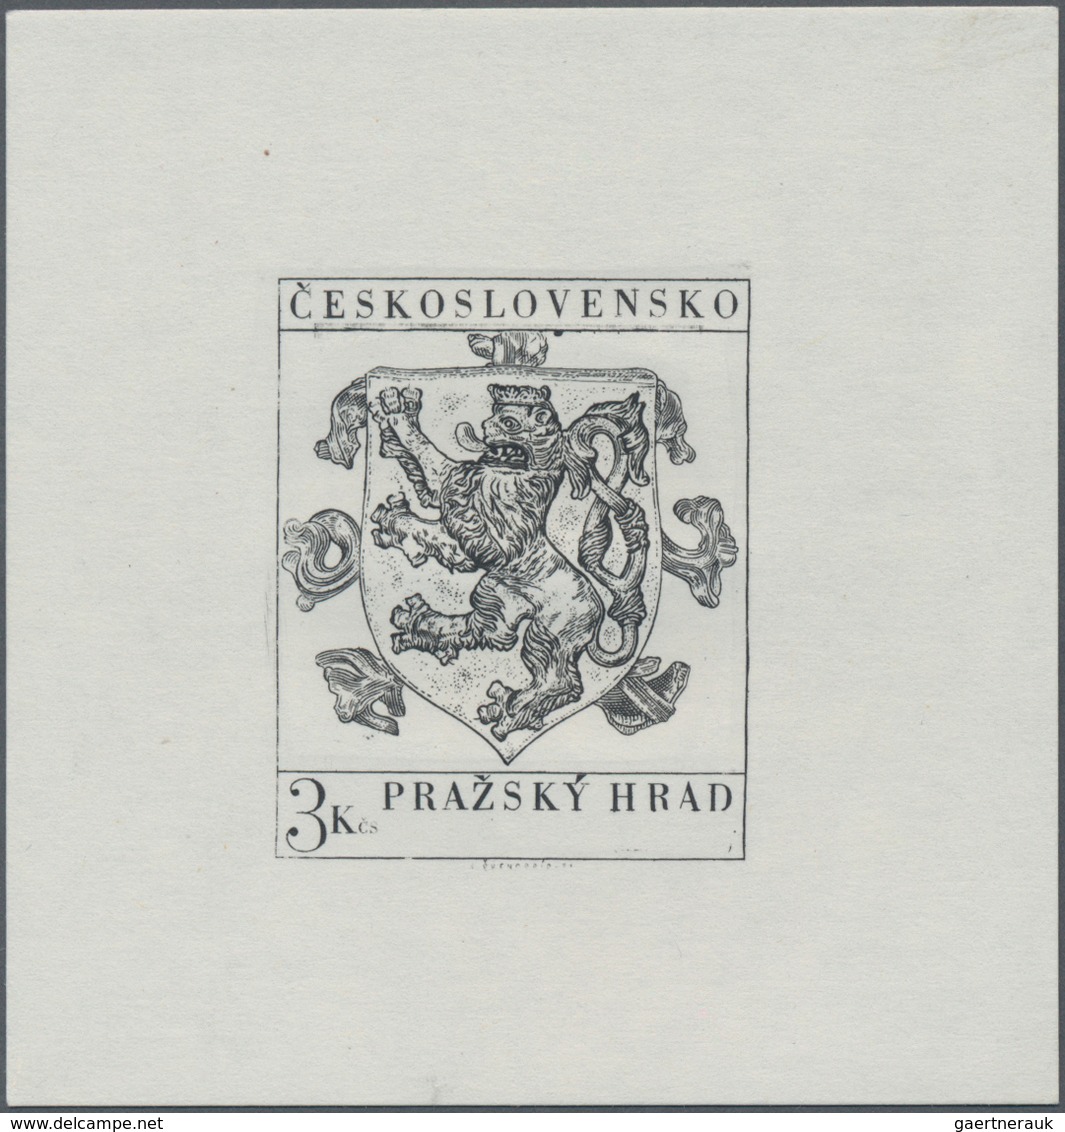 Tschechoslowakei: 1971/1973, Prague Hradčany, eleven imperforated progressive proofs incl. three com